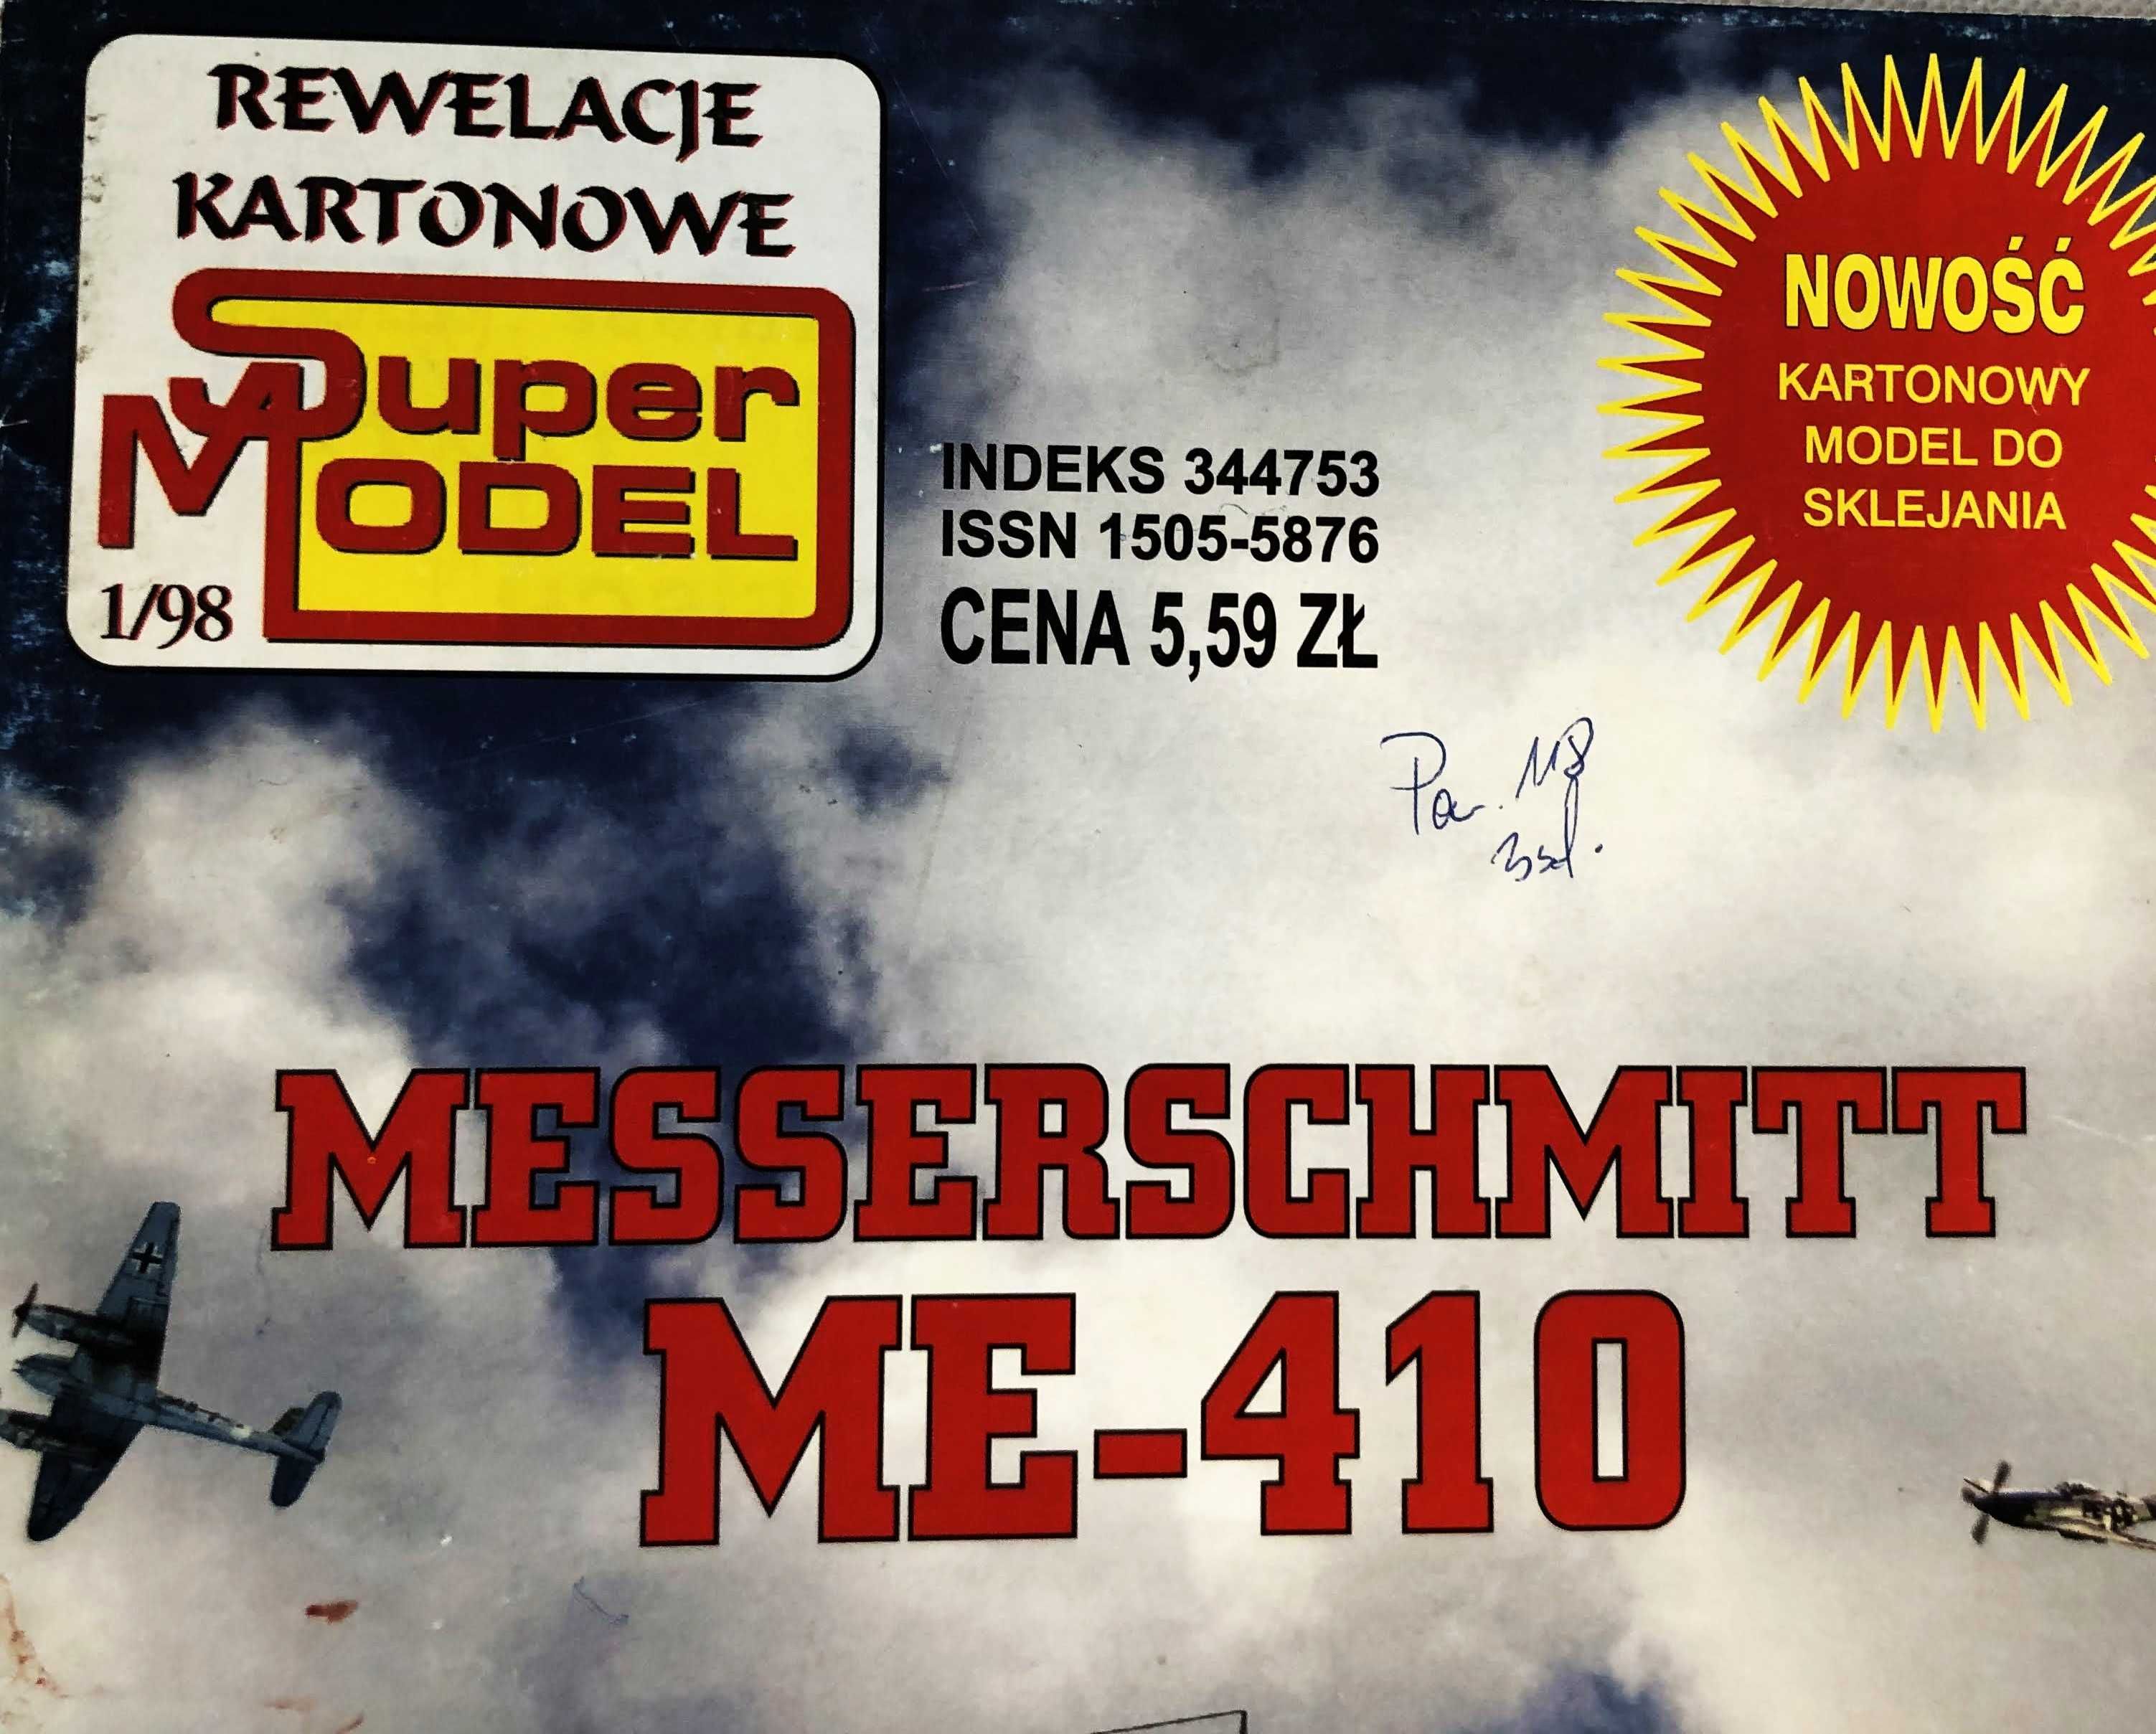 Super Model MESSERSCHMITT ME-410 kartonowy model skala 1:33